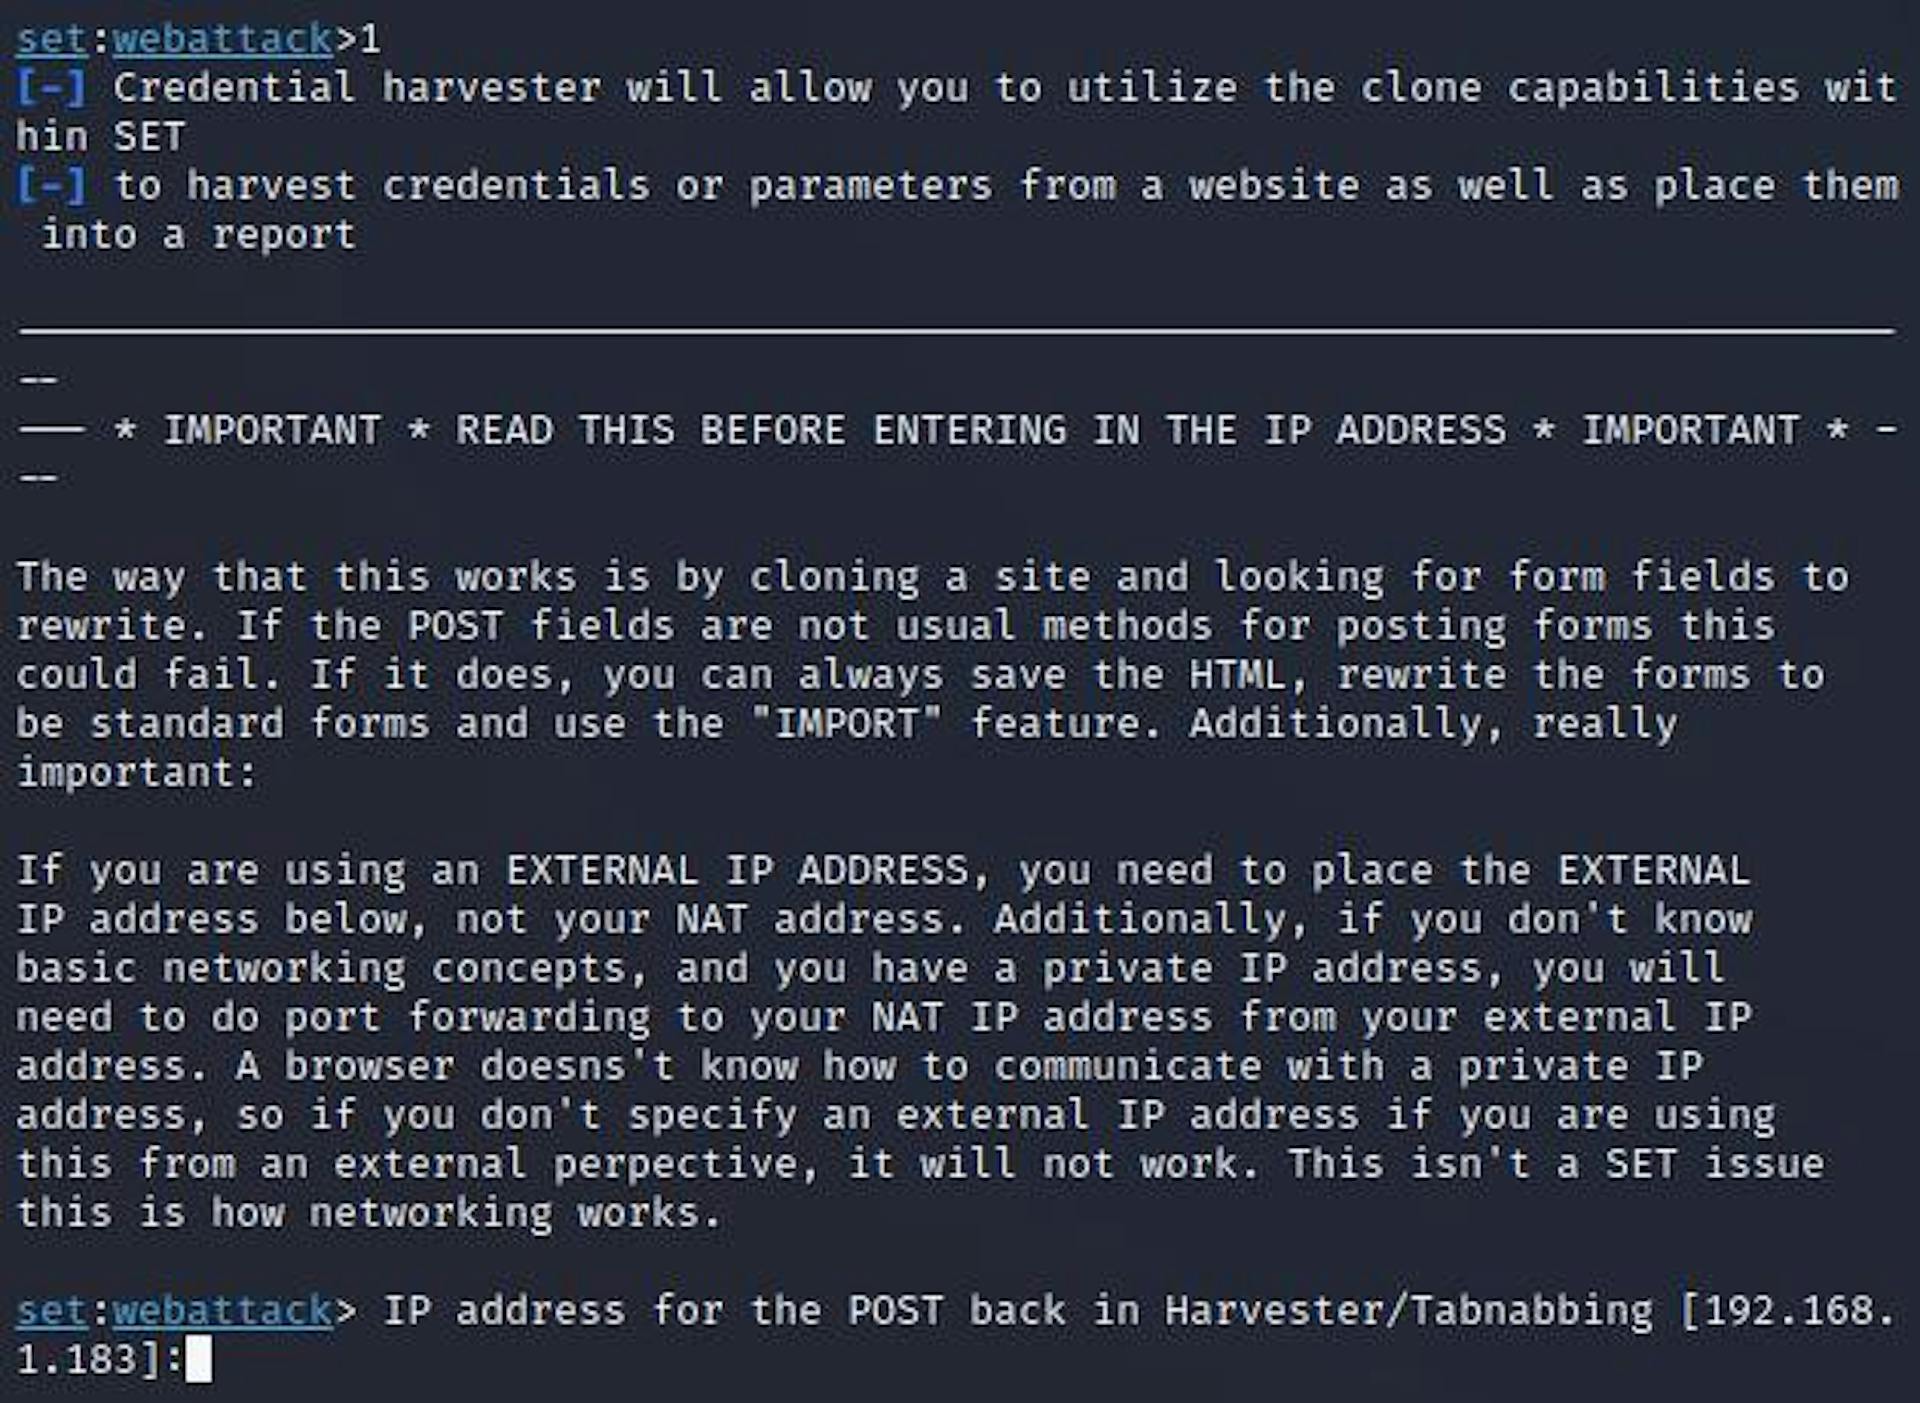 IP Address for Harvester/Tabnapping